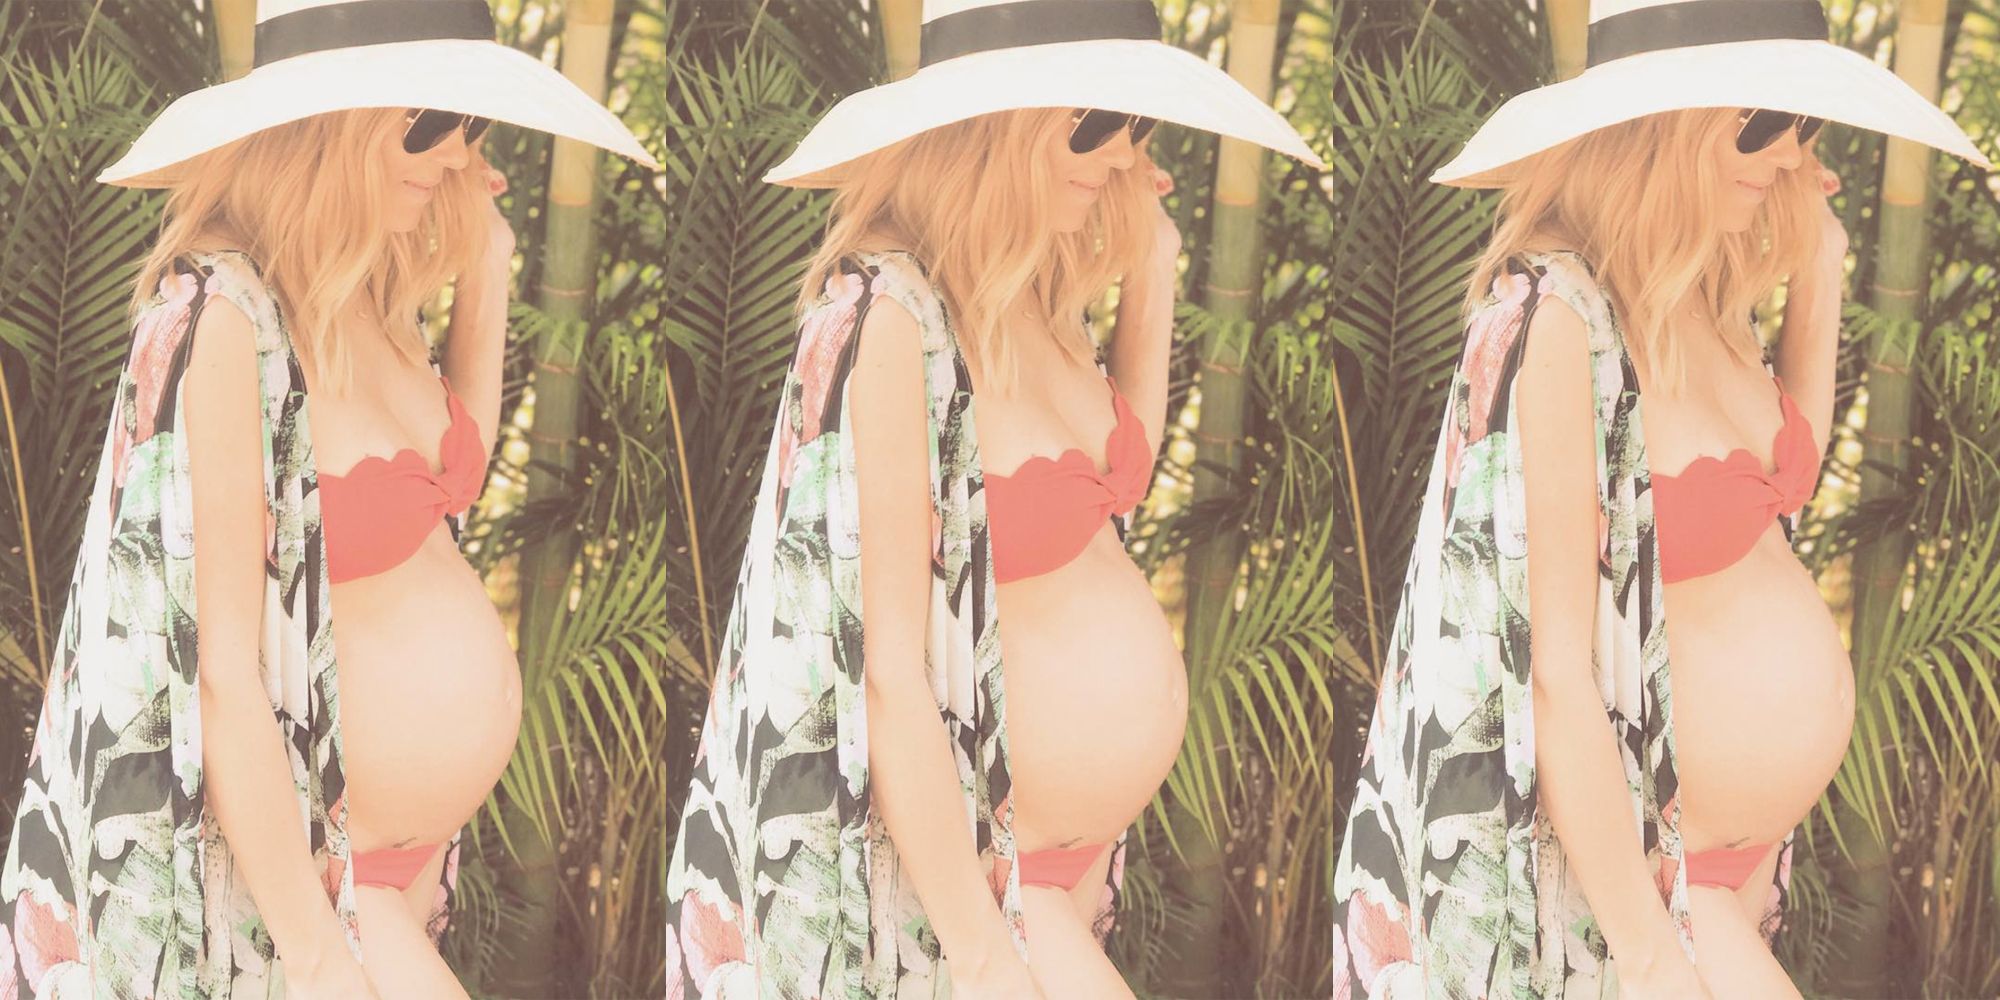 Lauren Conrad Pregnant Kohls Maternity Clothing Line LC